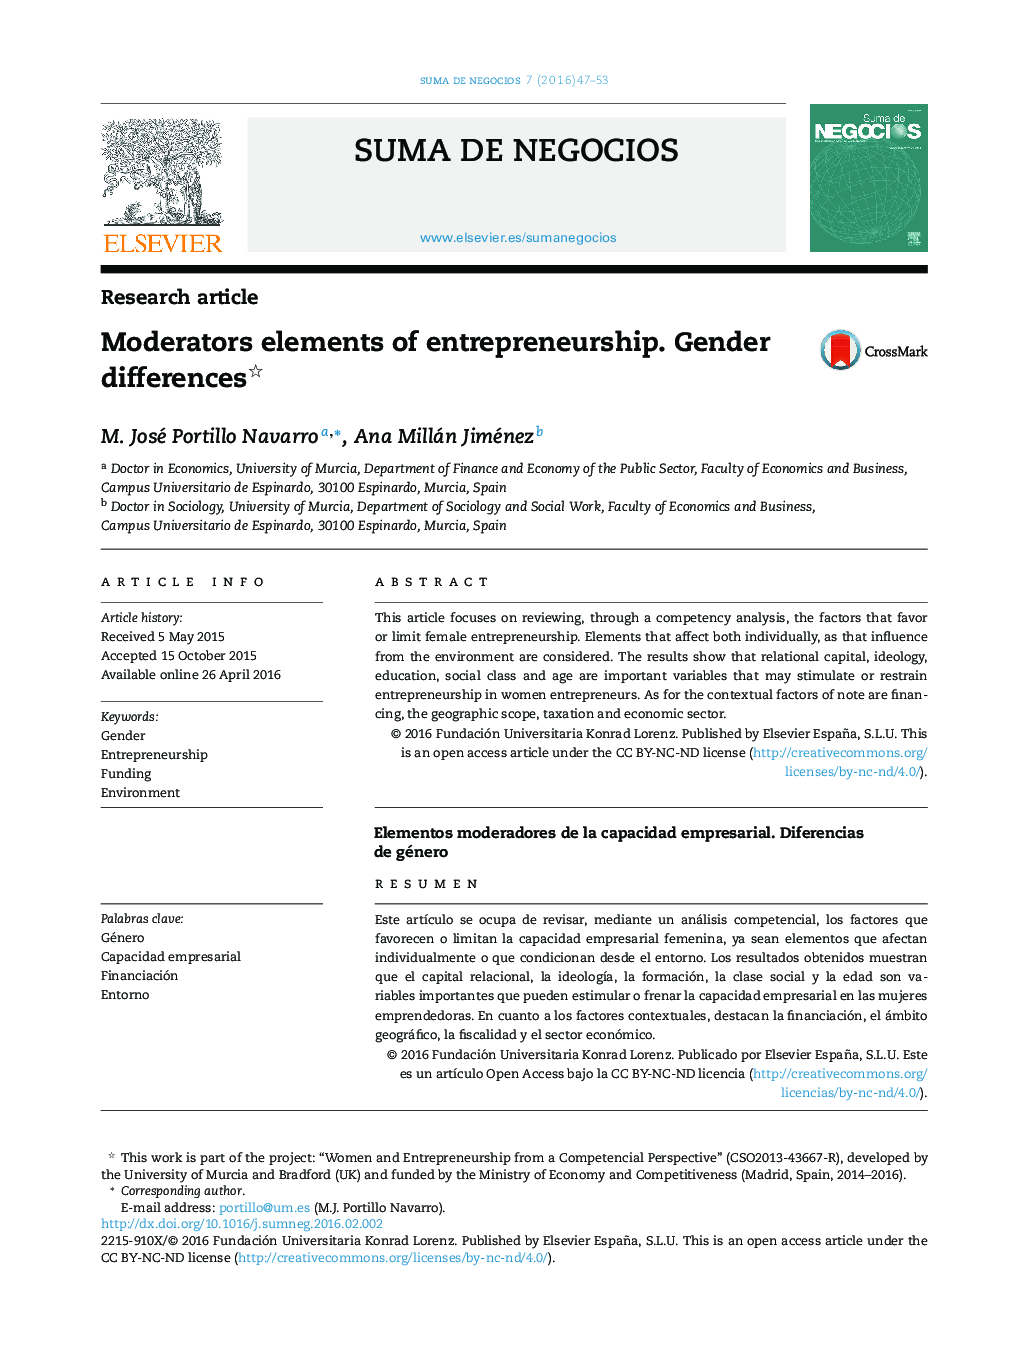 Moderators elements of entrepreneurship. Gender differences 